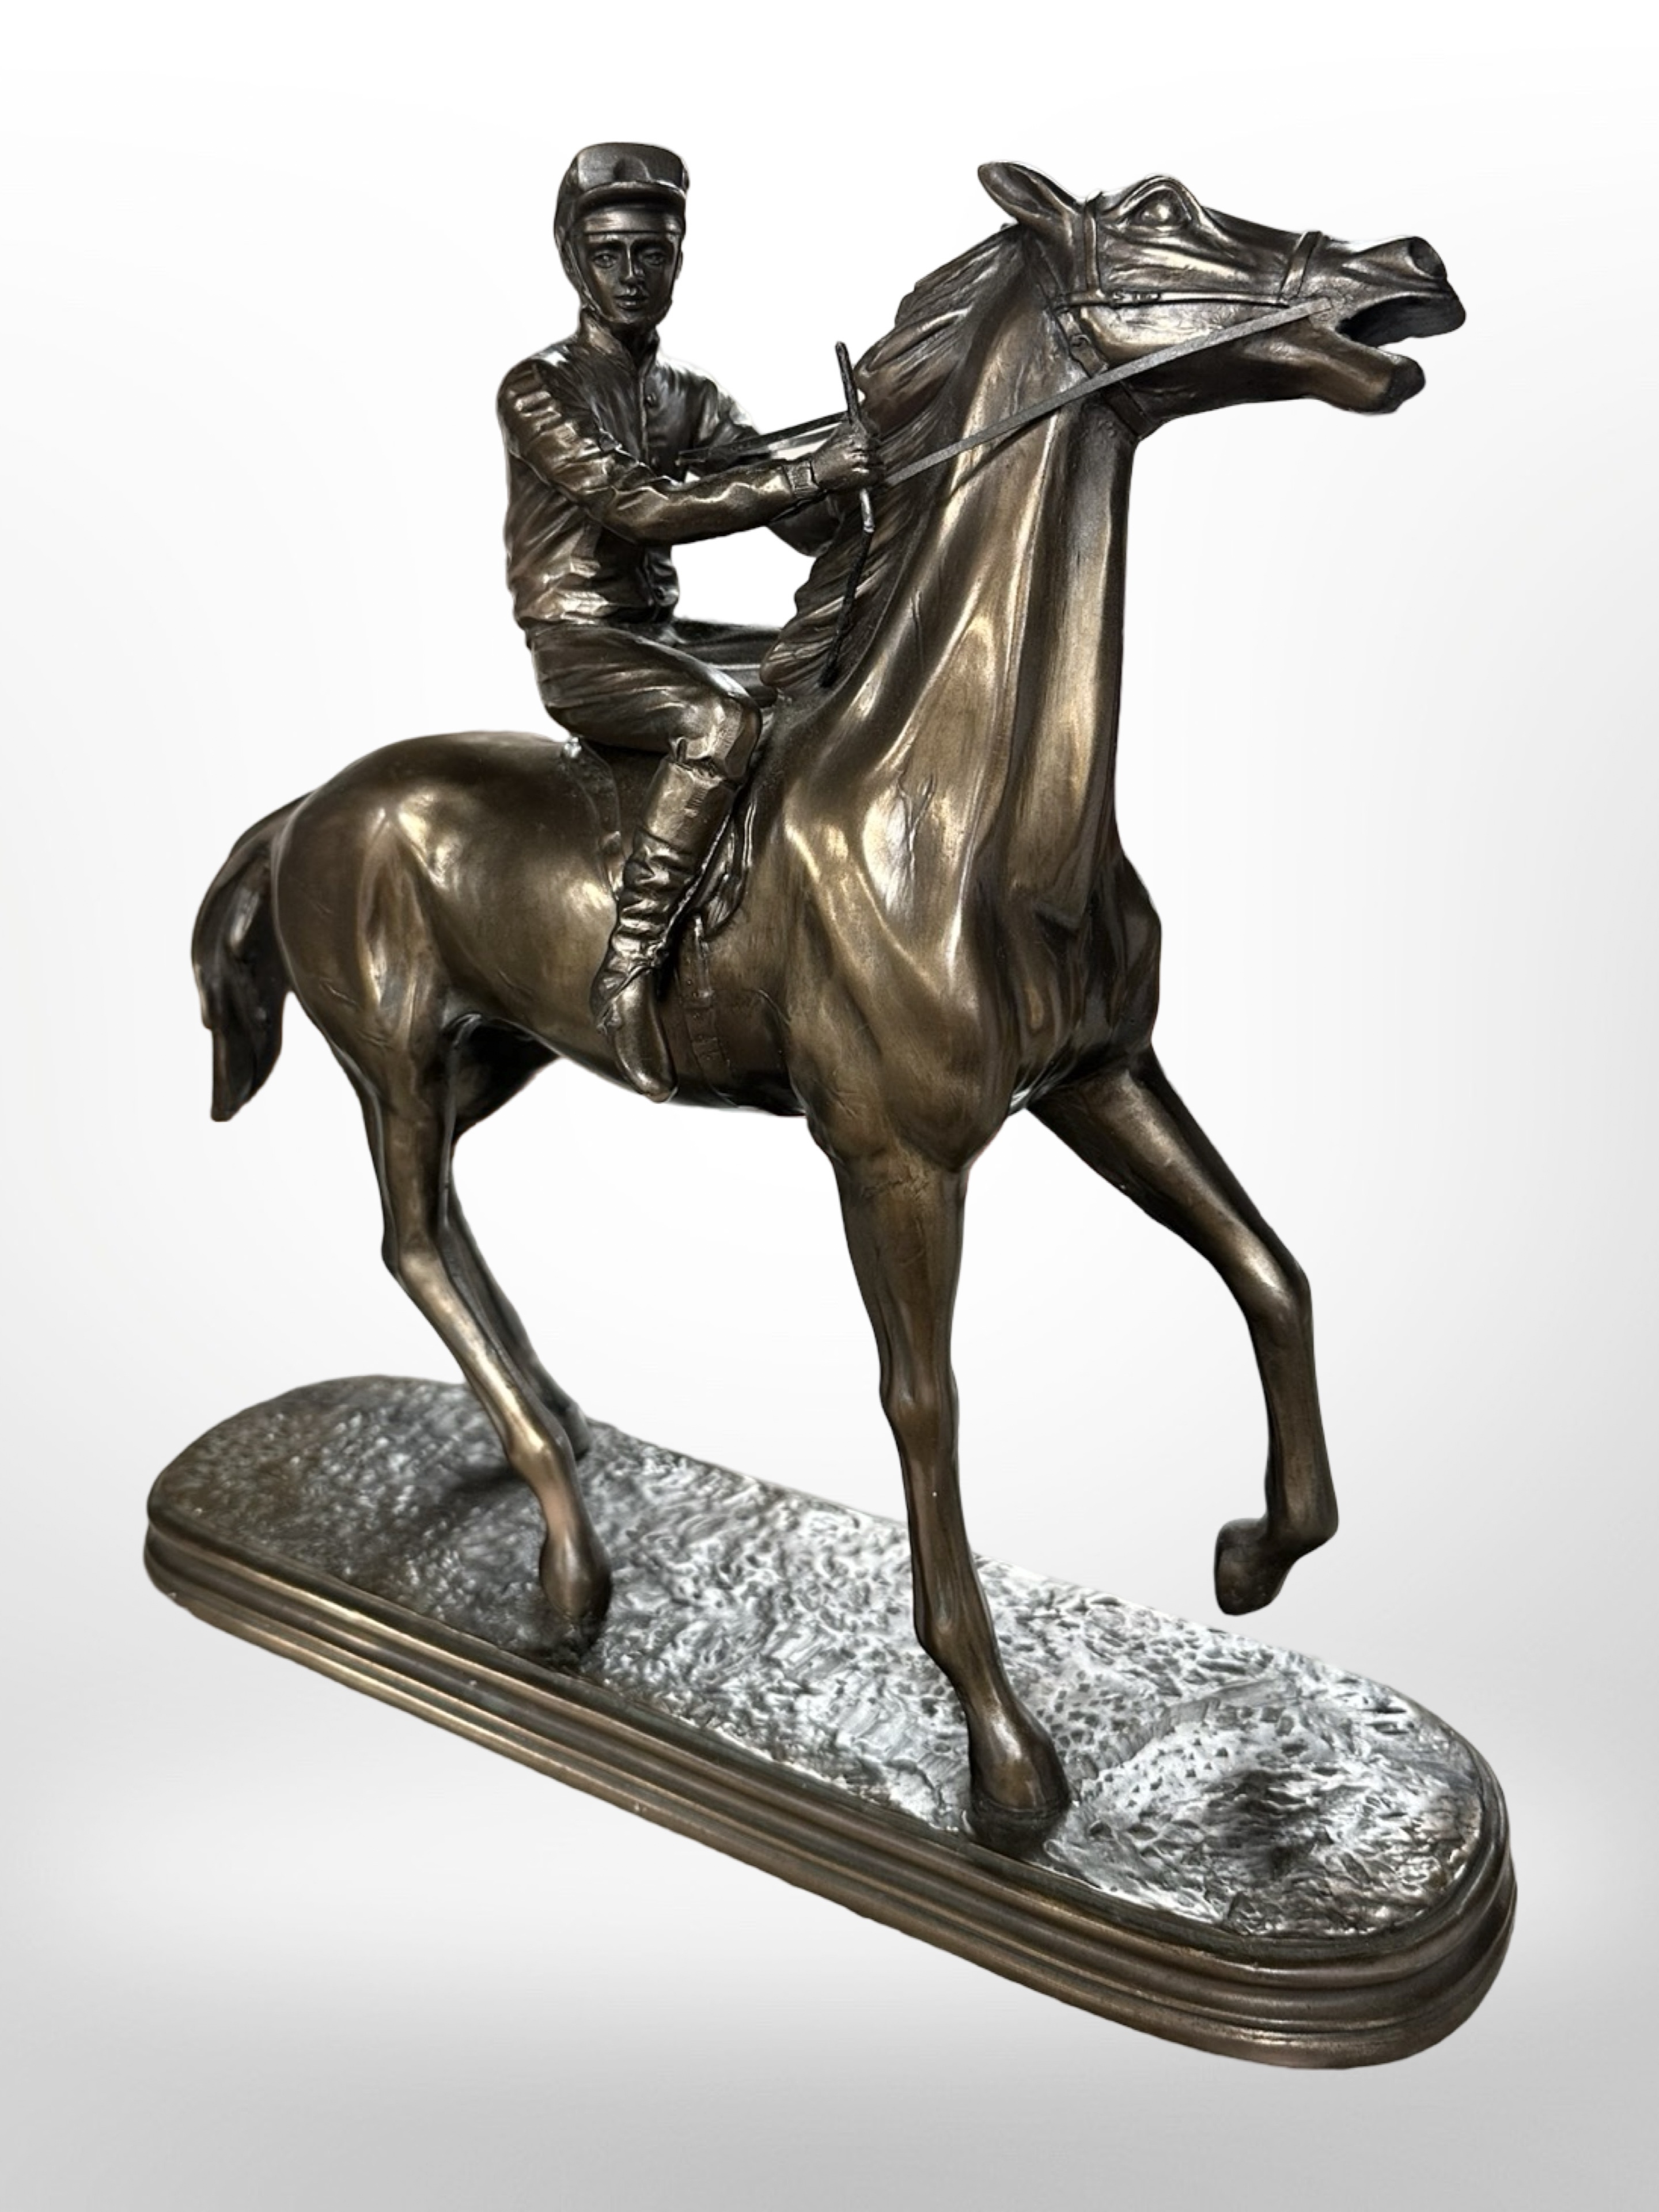 An Oliver Tupton bronzed resin figure of a jockey on horseback, height 28cm.